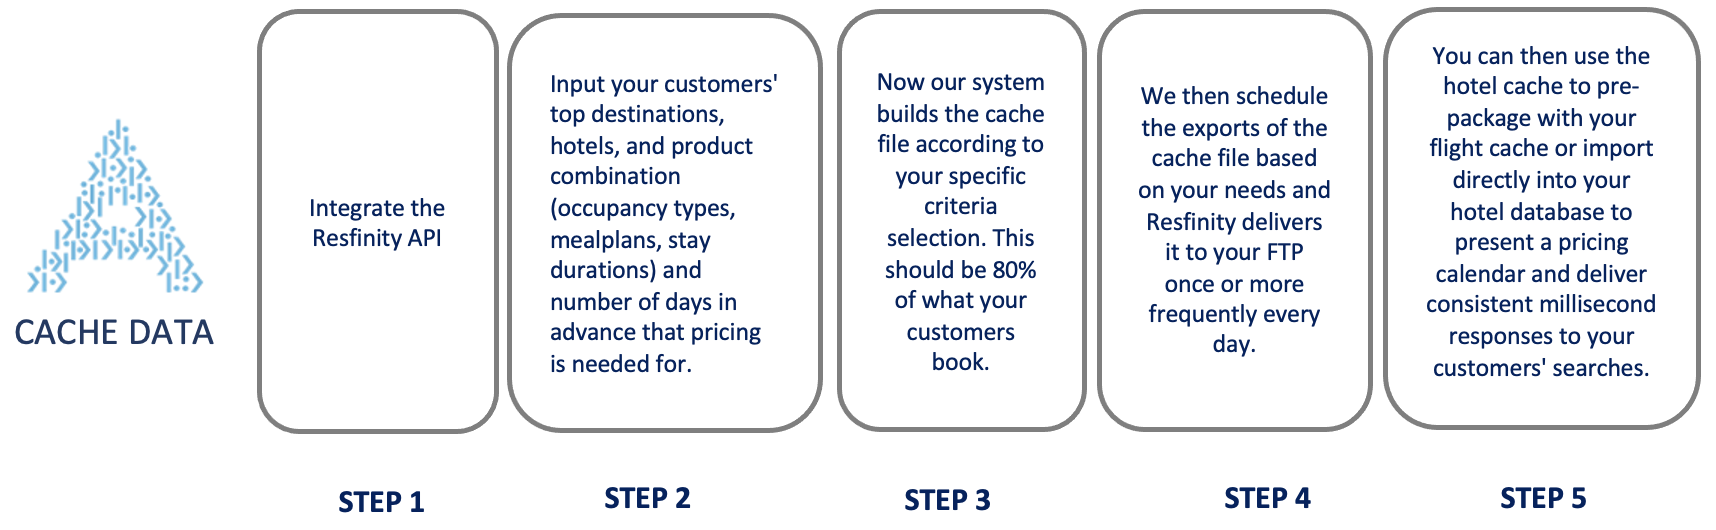 cache data 5 steps diagram